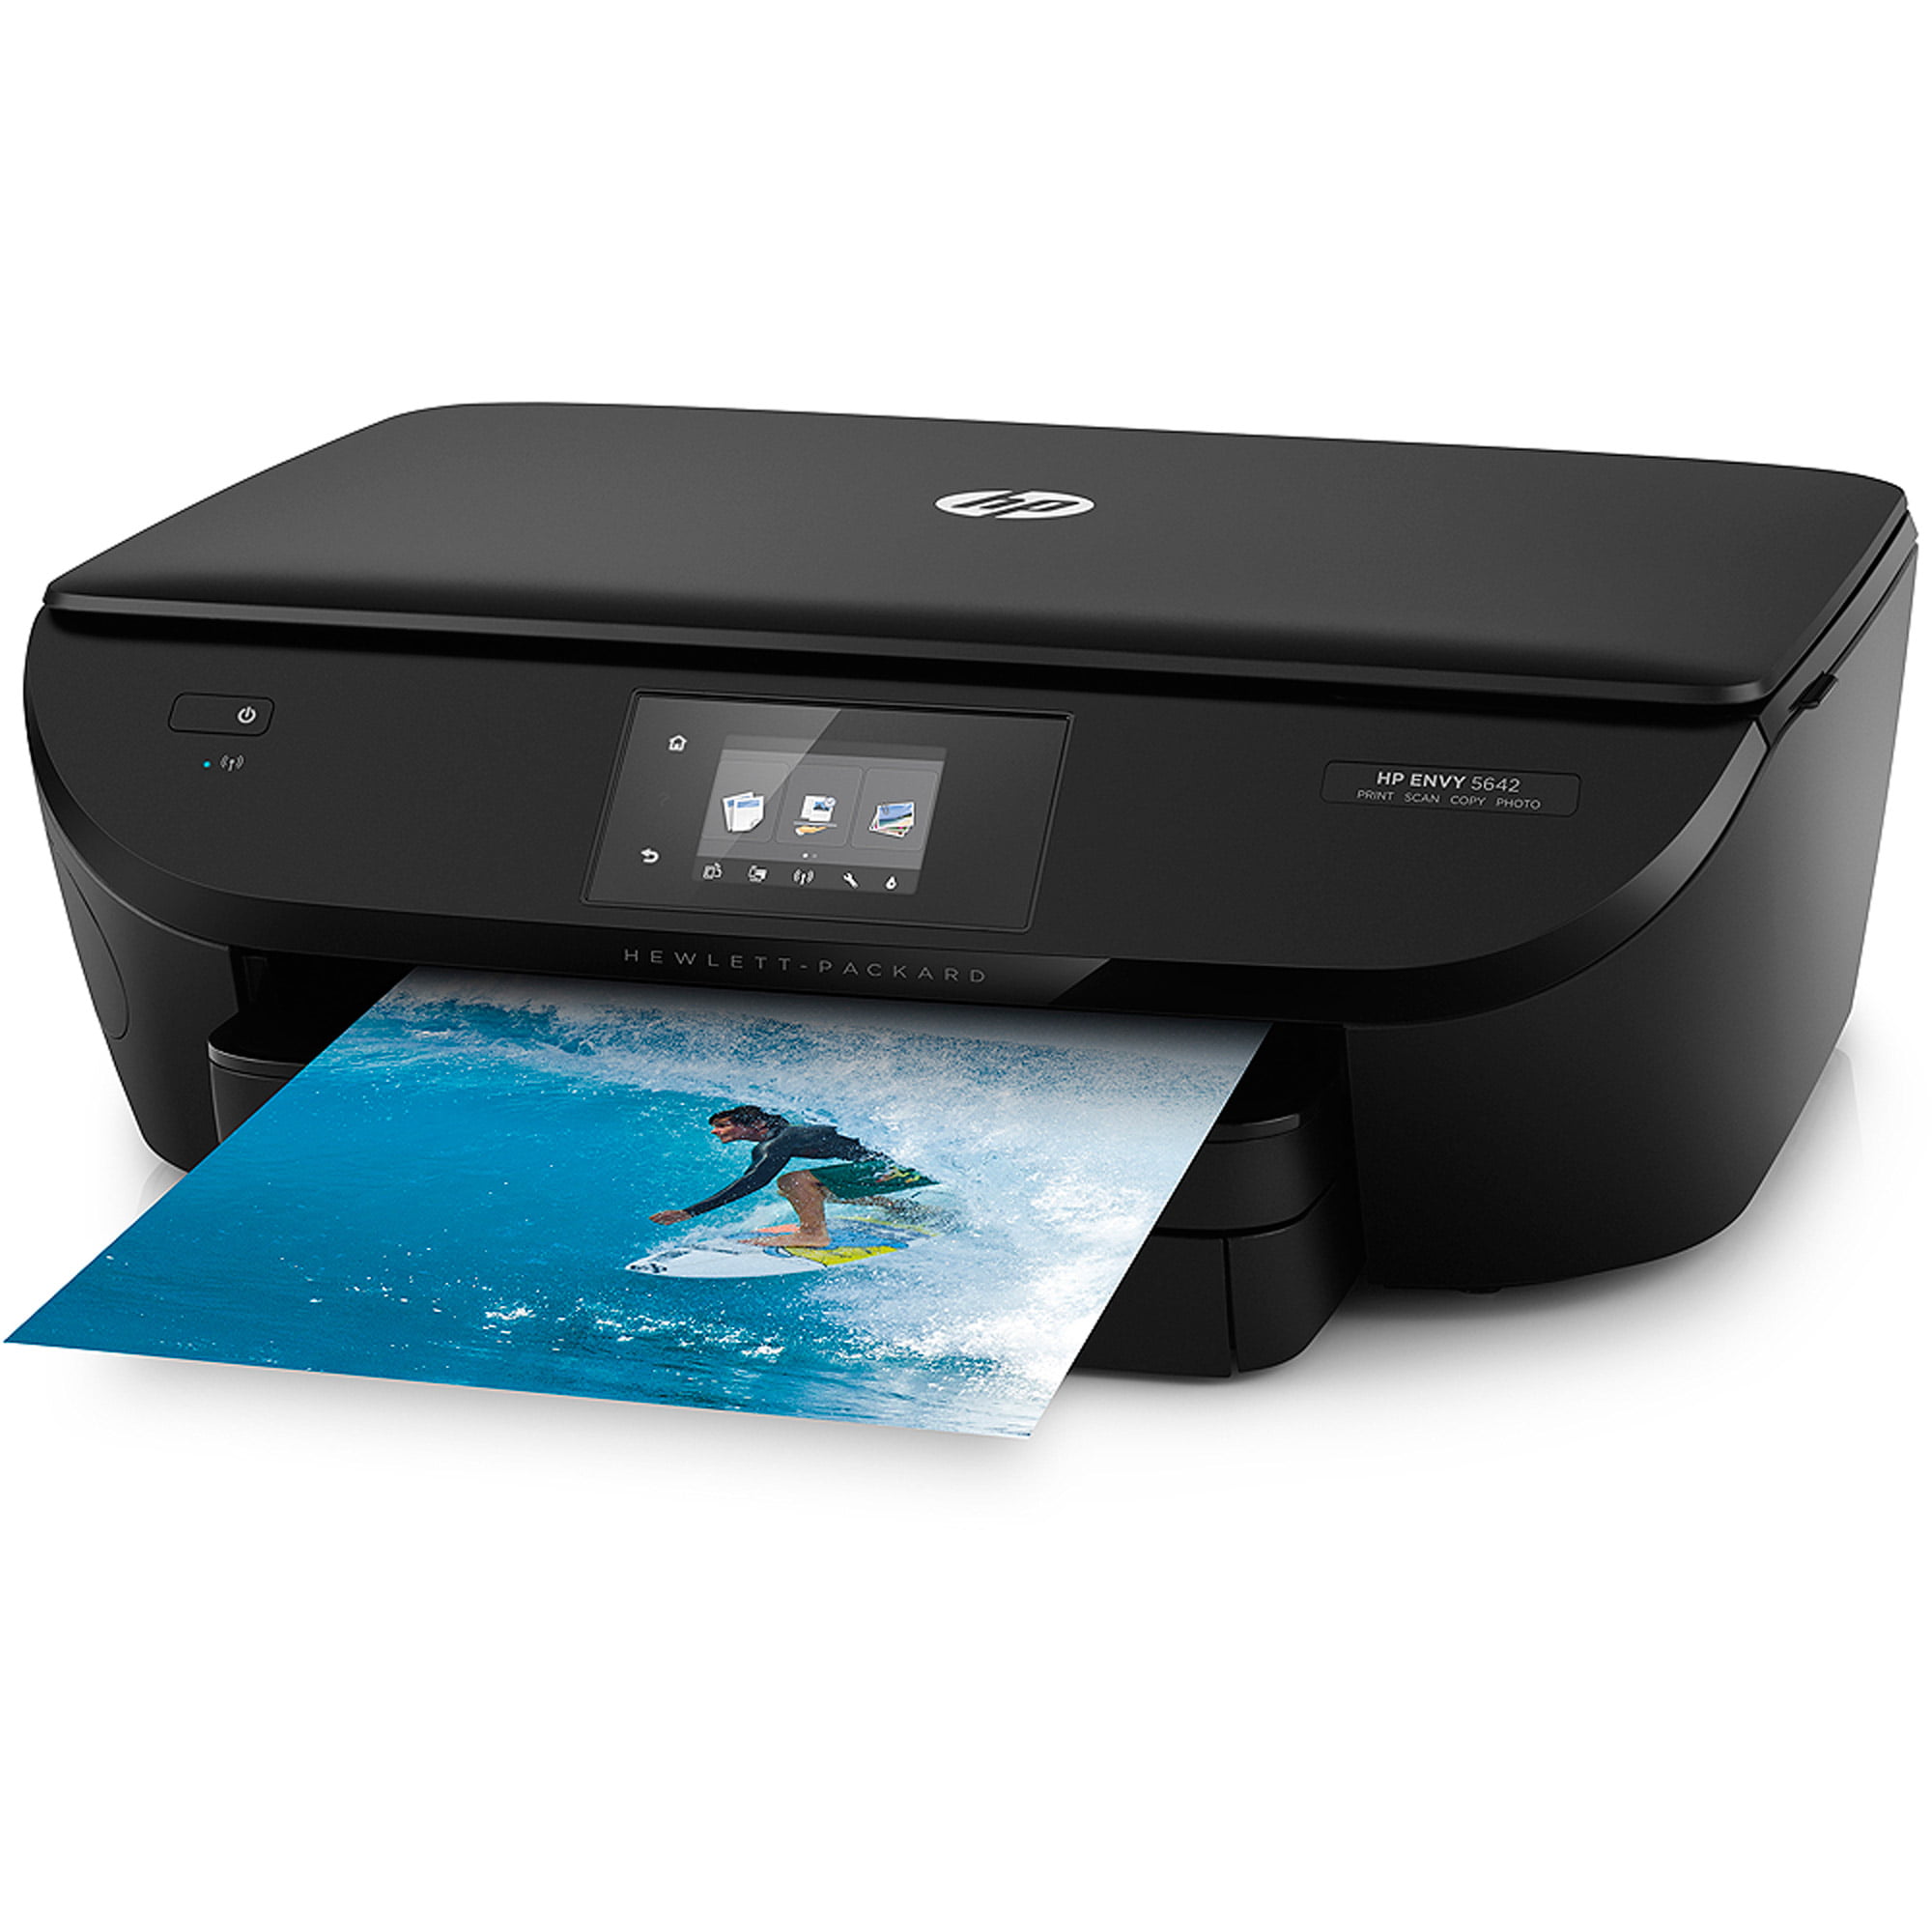 HP Envy 5642 Printer/Copier/Scanner - Walmart.com